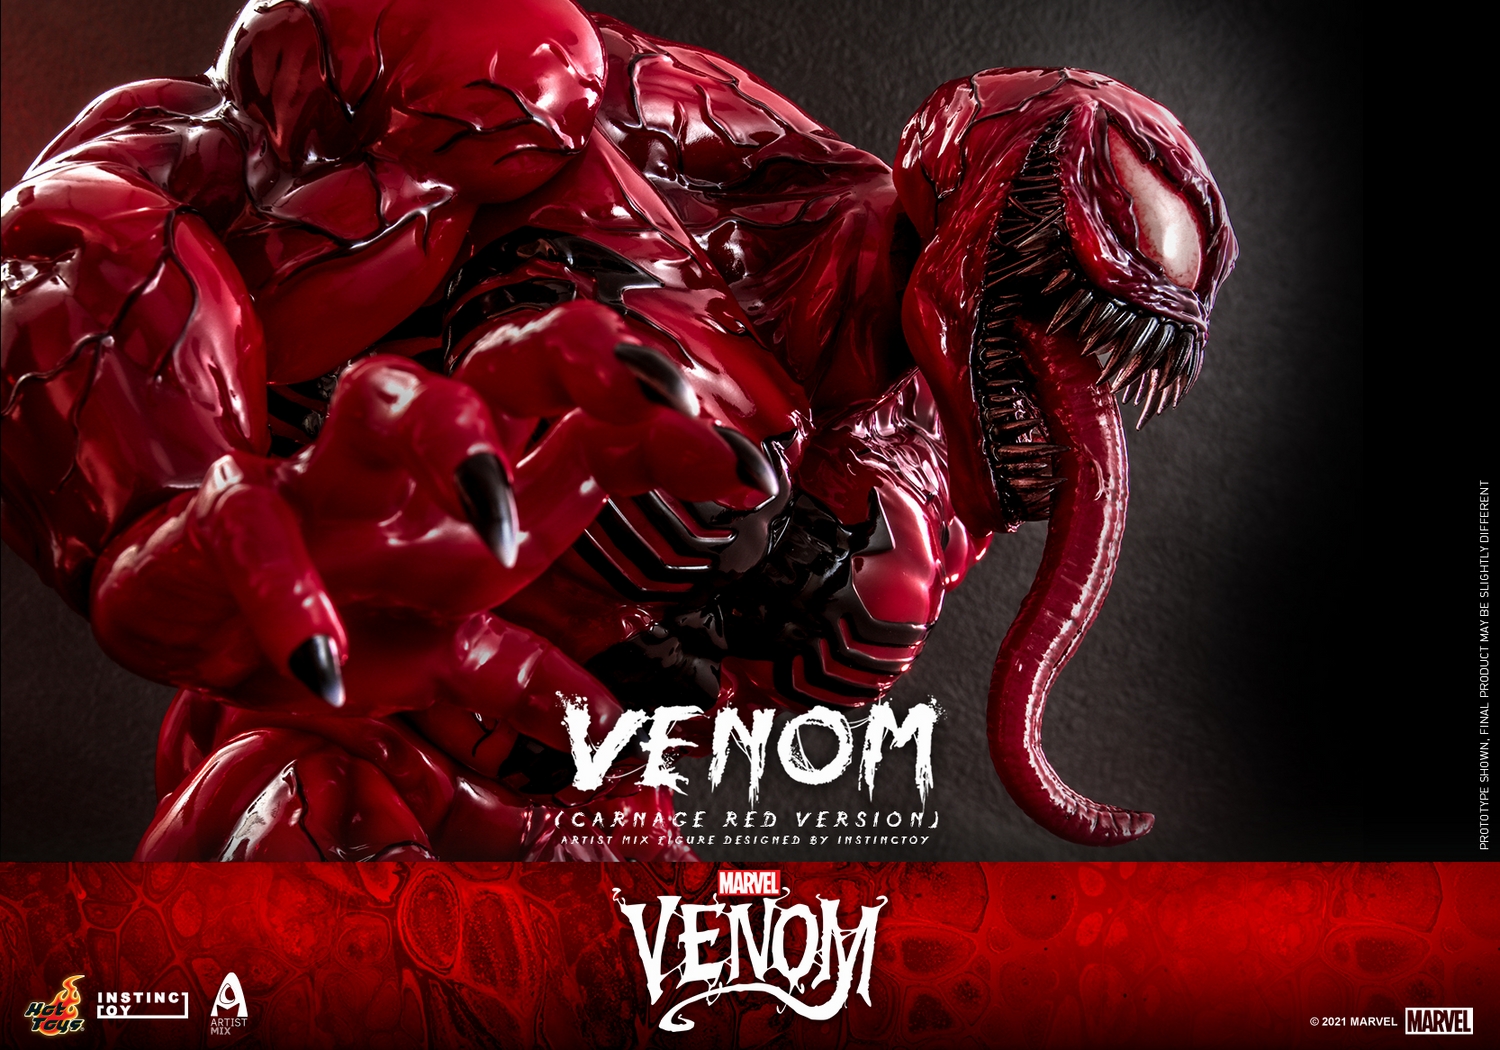 Hot Toys - Venom (Carnage Red Version) Artist Mix Figure Designed by Instinctoy_PR8.jpg